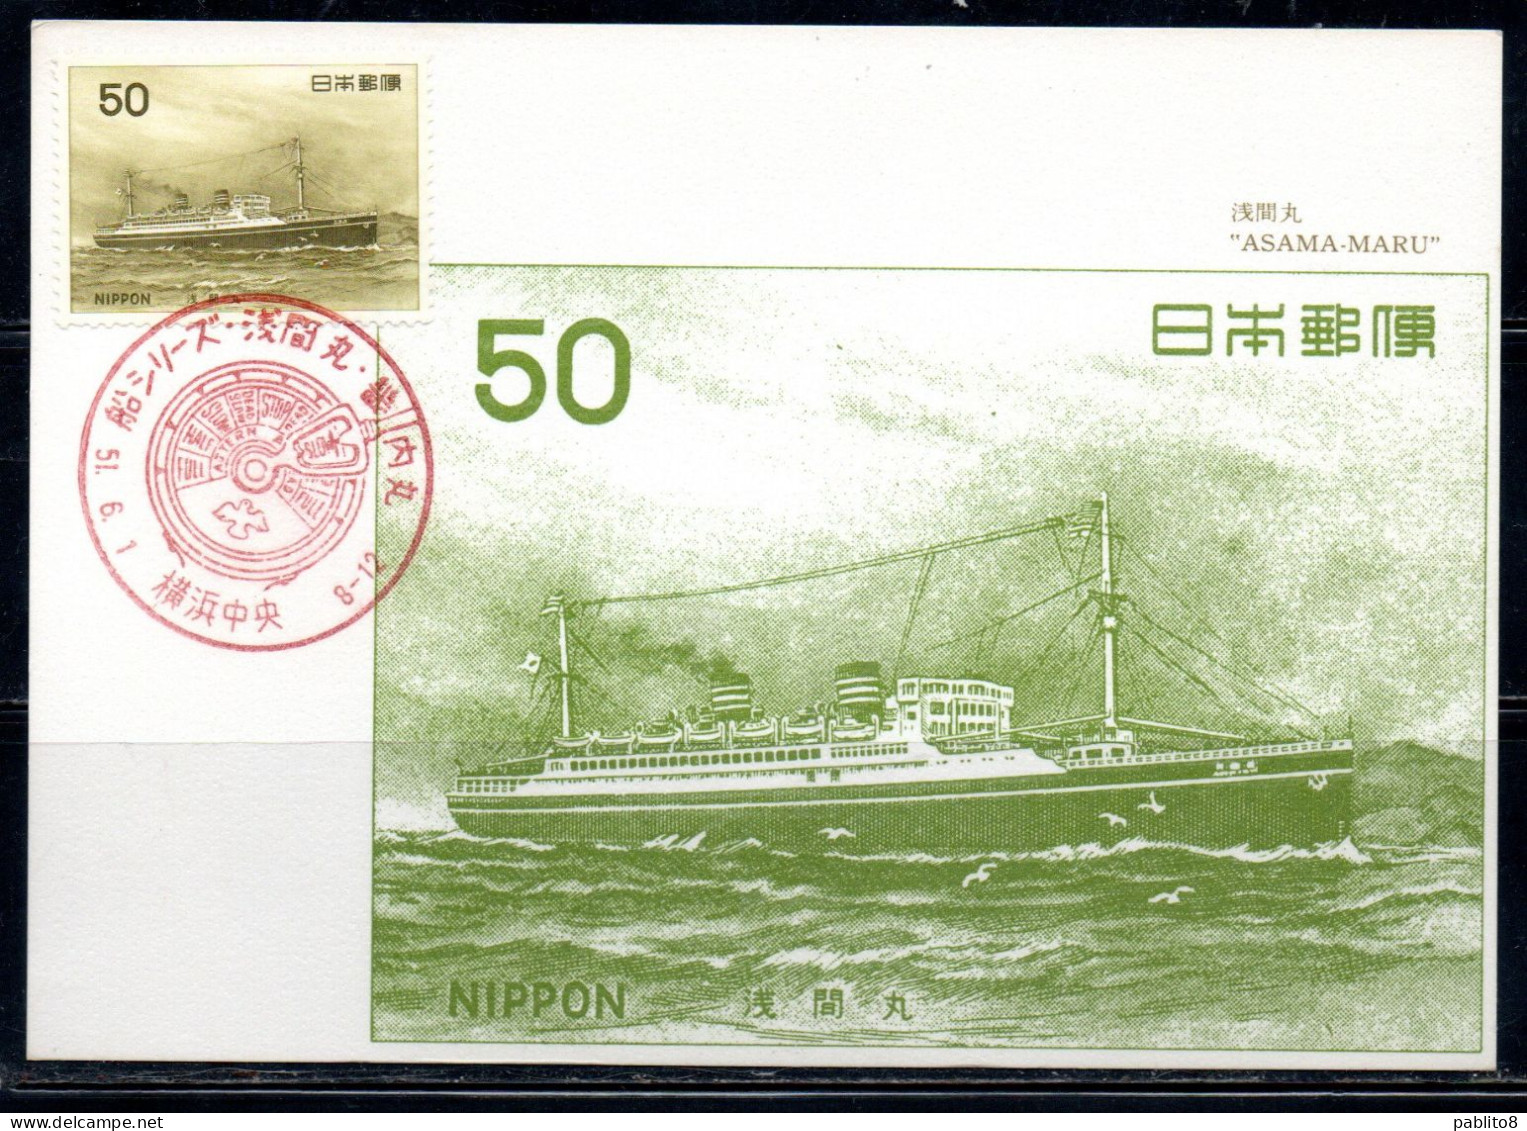 JAPAN GIAPPONE 1975 1976 HISTORIC SHIPS ISSUE ASAMA-MARU SHIP 50y MAXI MAXIMUM CARD - Maximum Cards